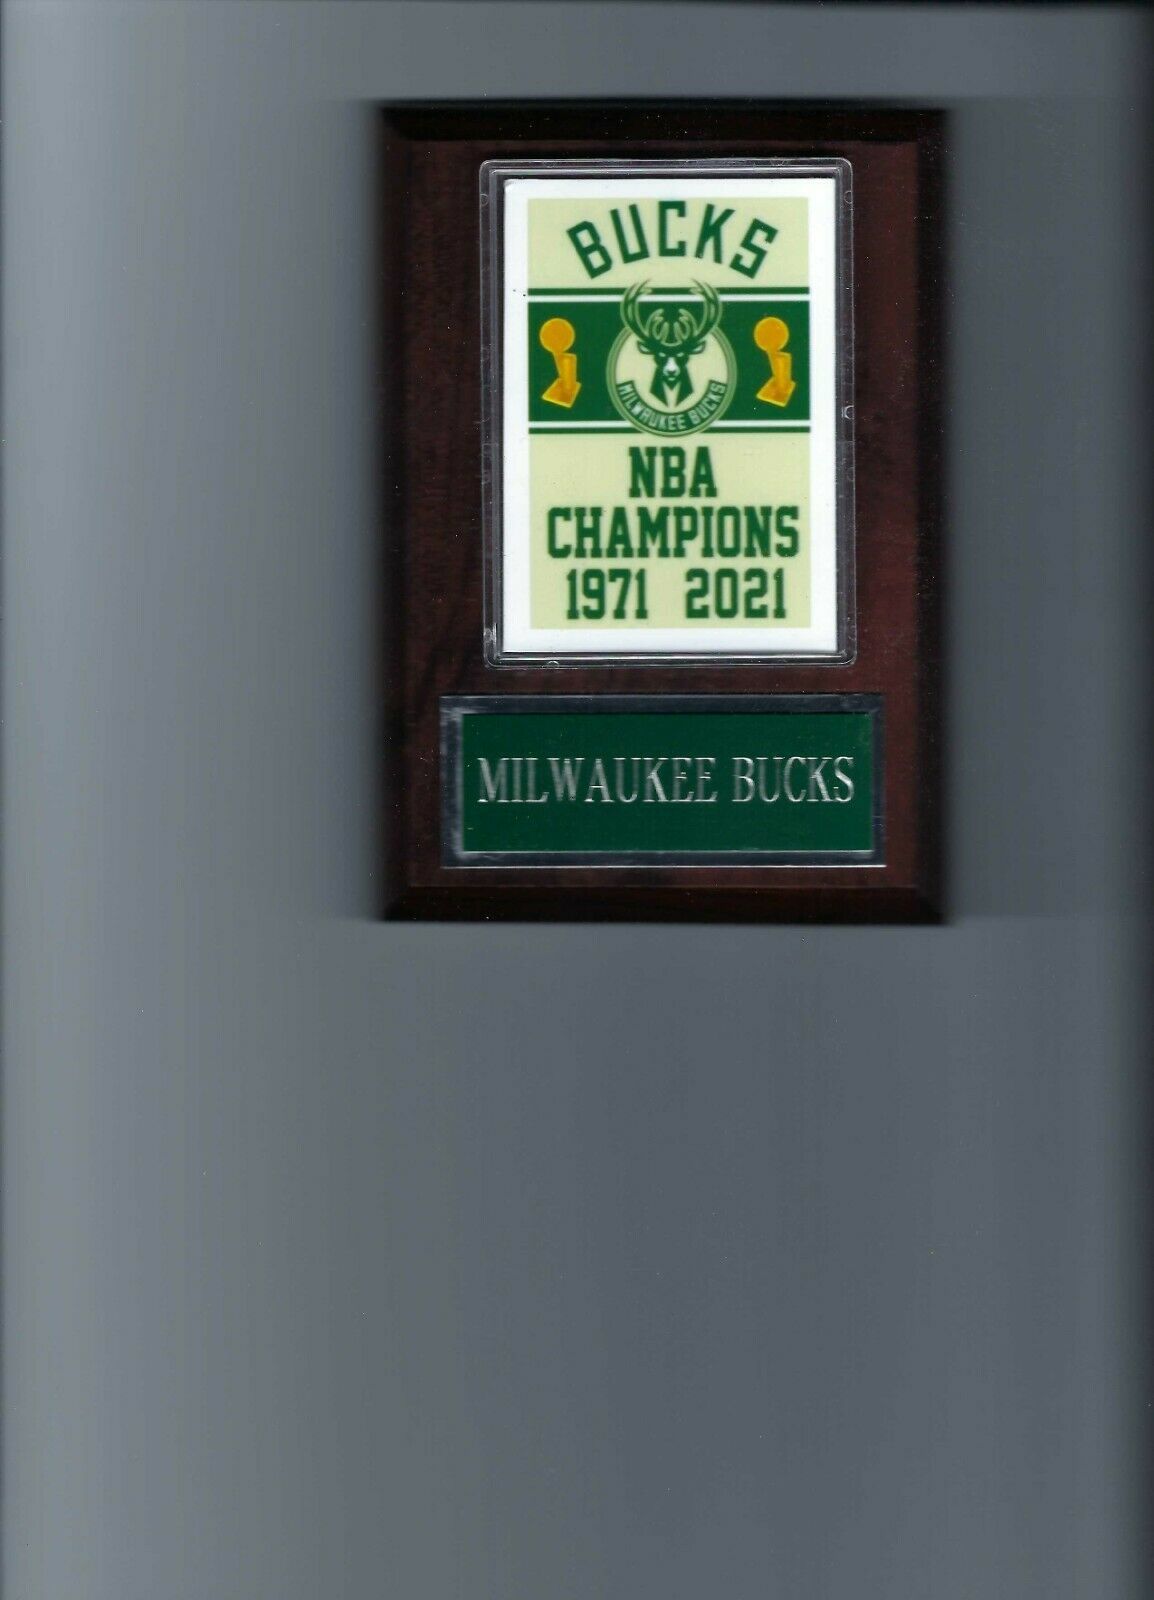 Primary image for 2021 MILWAUKEE BUCKS CHAMPS PLAQUE BASKETBALL NBA CHAMPIONS 1971